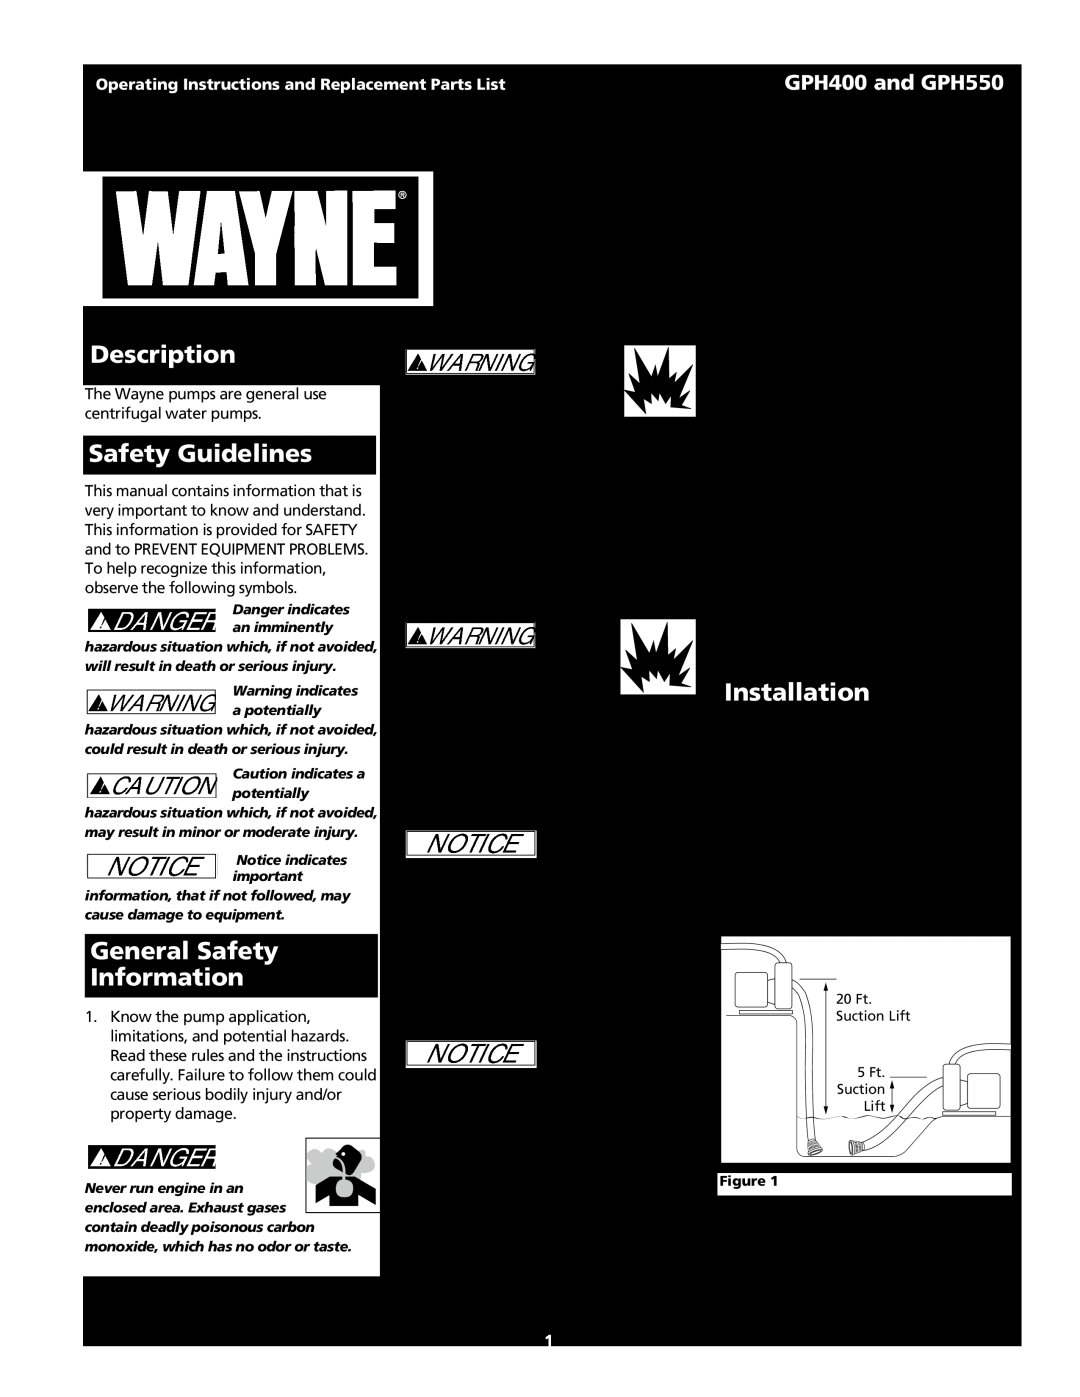 Wayne GPH550, GPH400 warranty Engine Driven Semi-Trash Pump, Description, Safety Guidelines, General Safety Information 